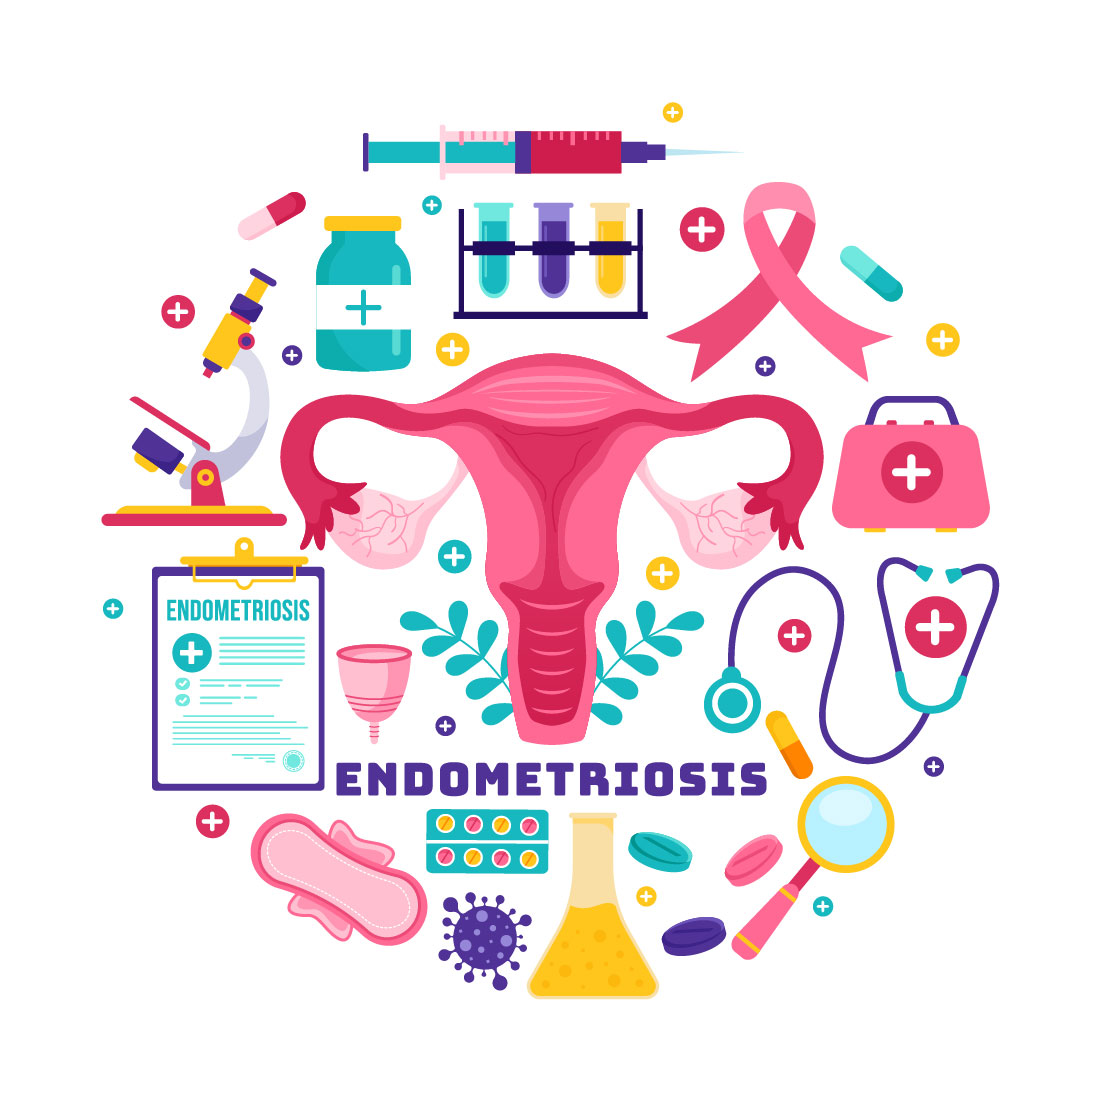 12 Endometriosis Illustration preview image.